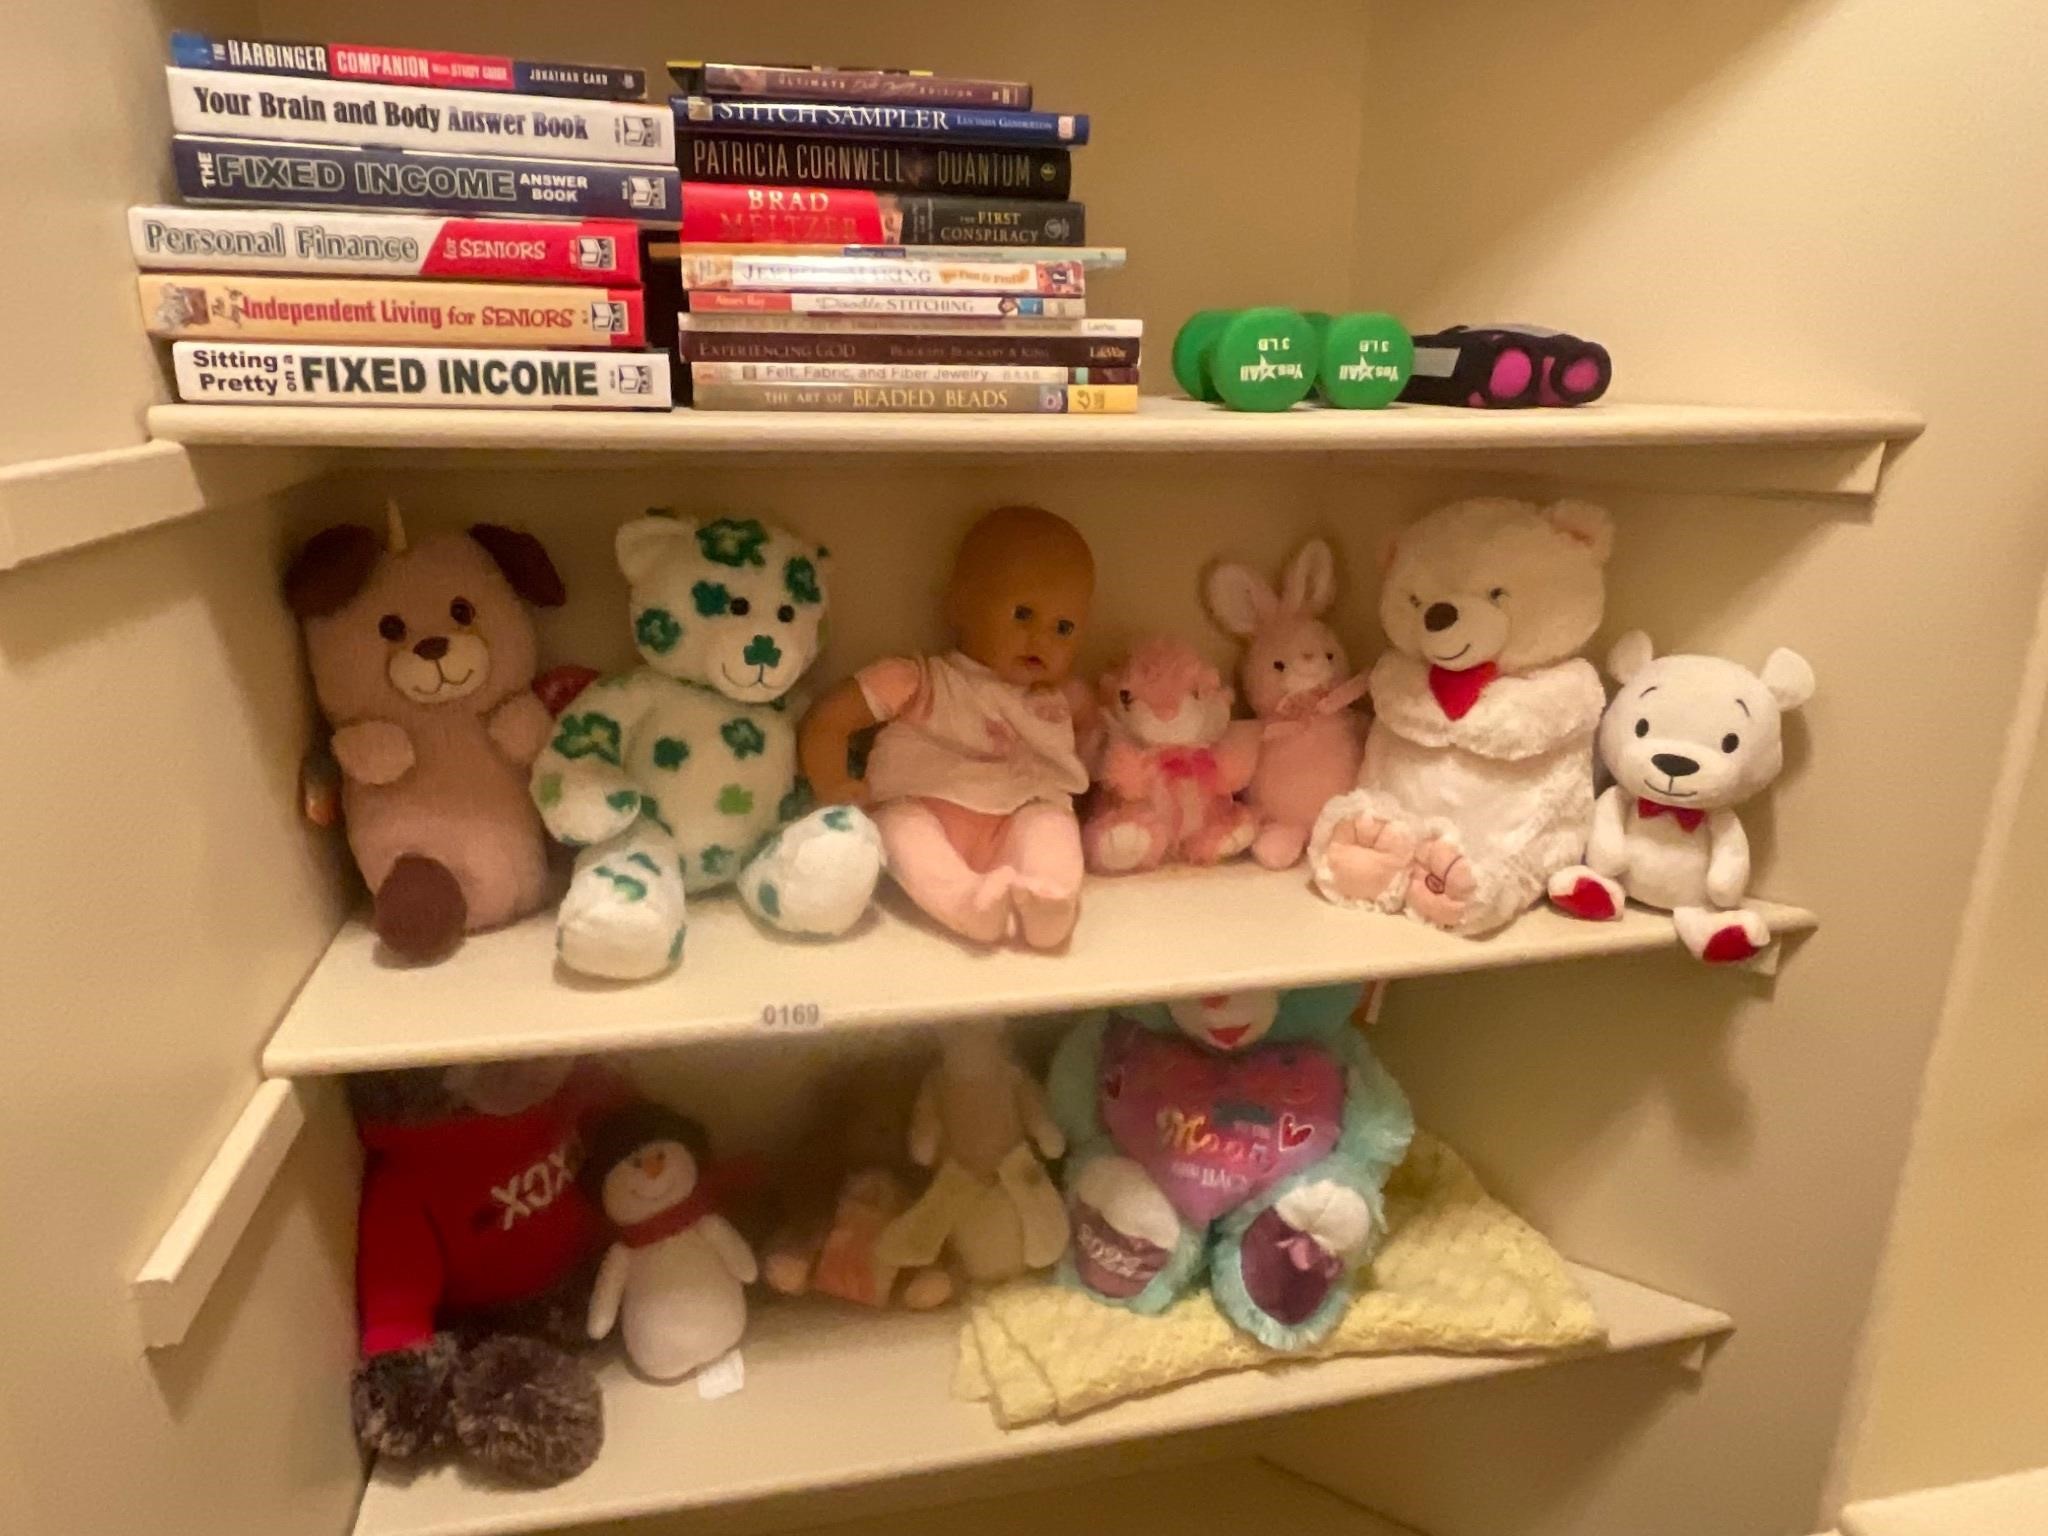 Stuffed animals, babies, books, all